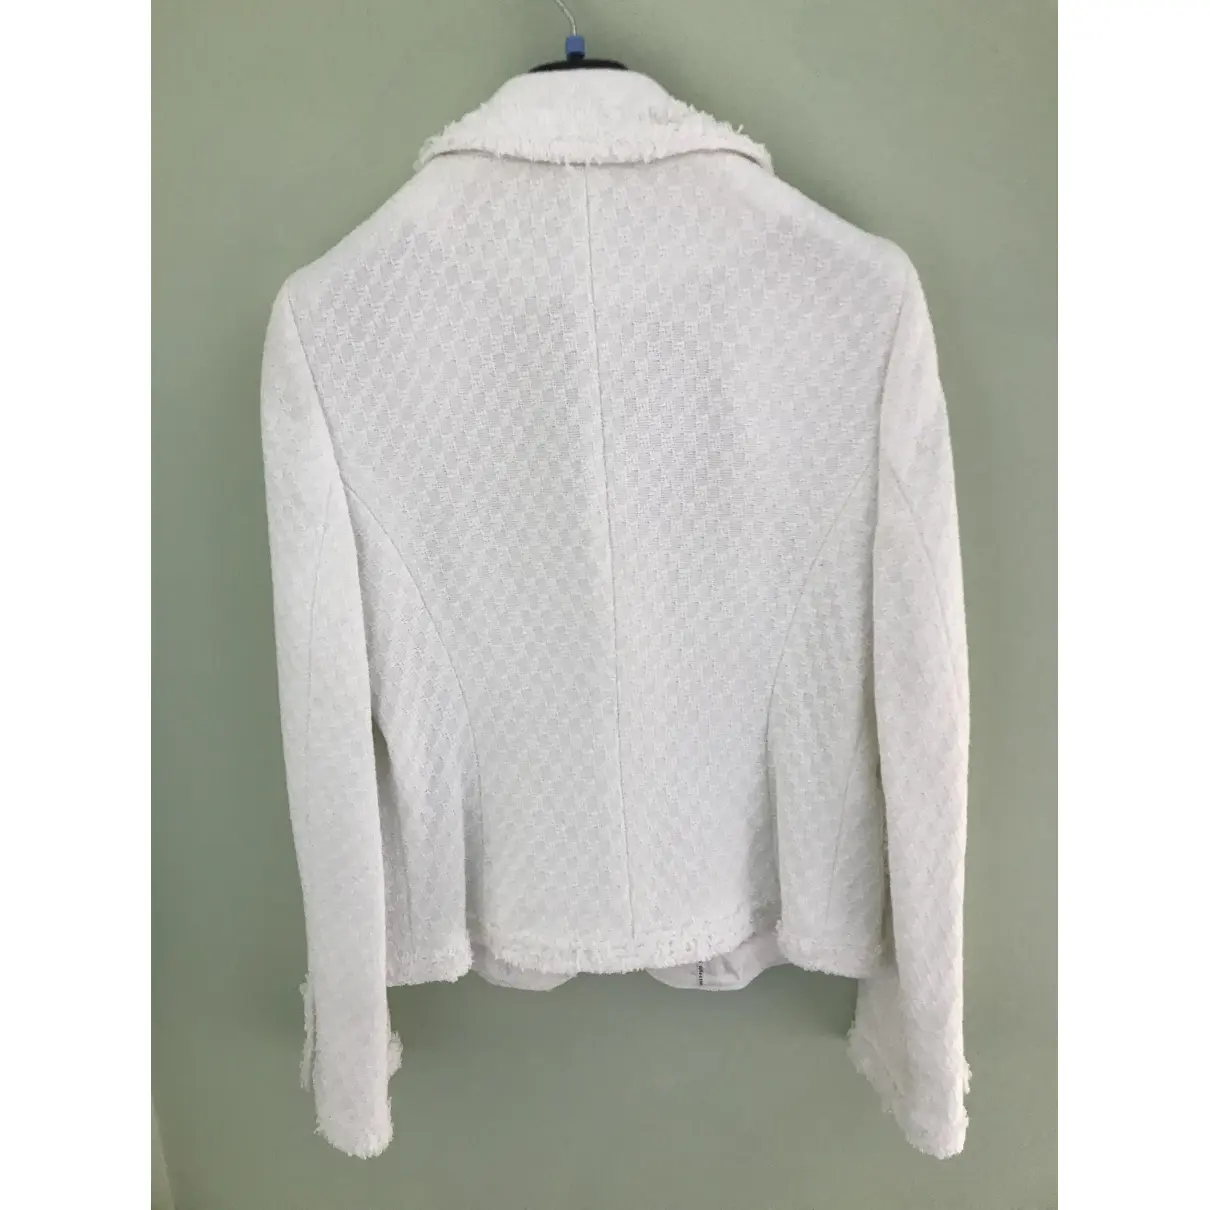 Buy ESPRIT White Cotton Jacket online